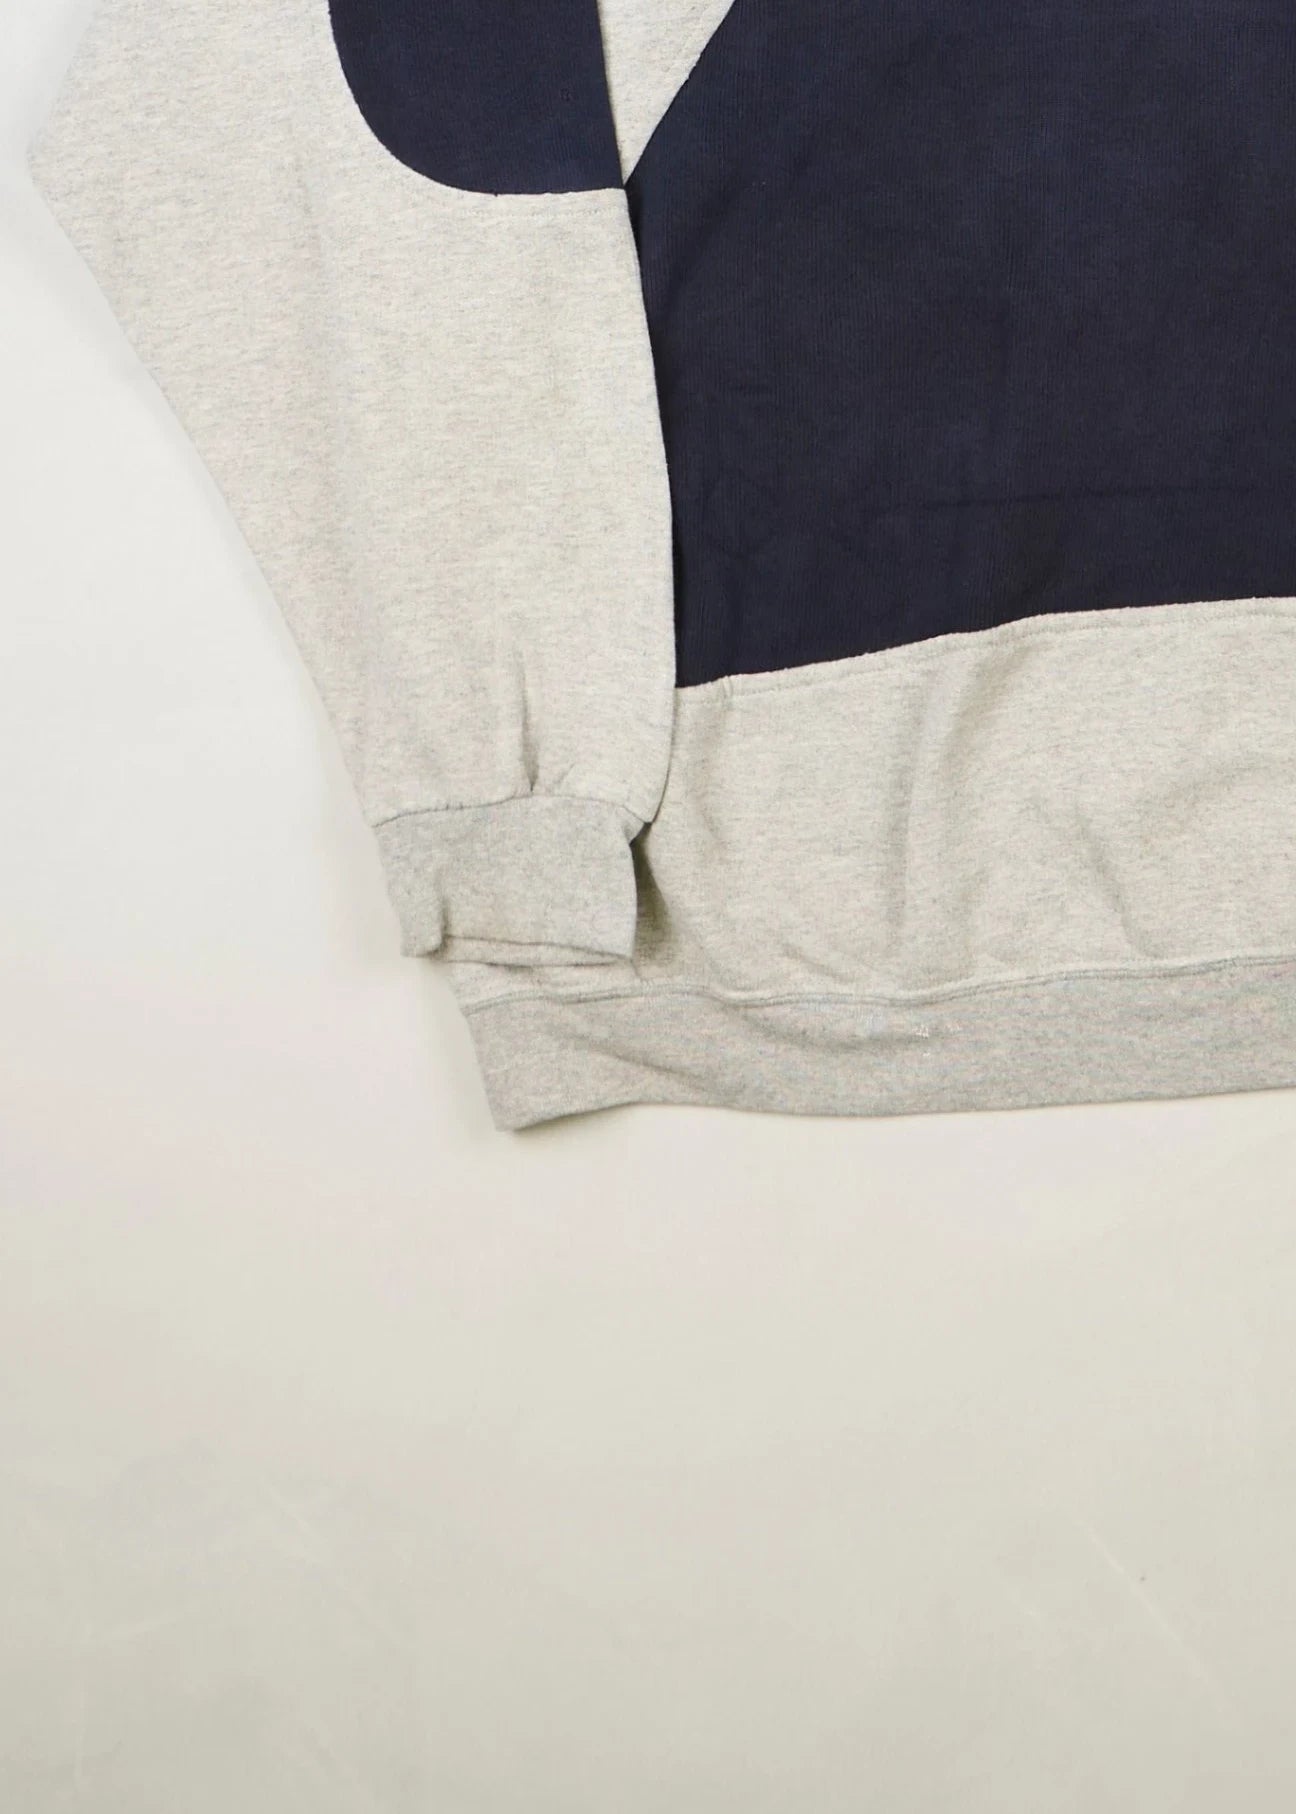 Ralph Lauren - Sweater (XXL) Bottom Left